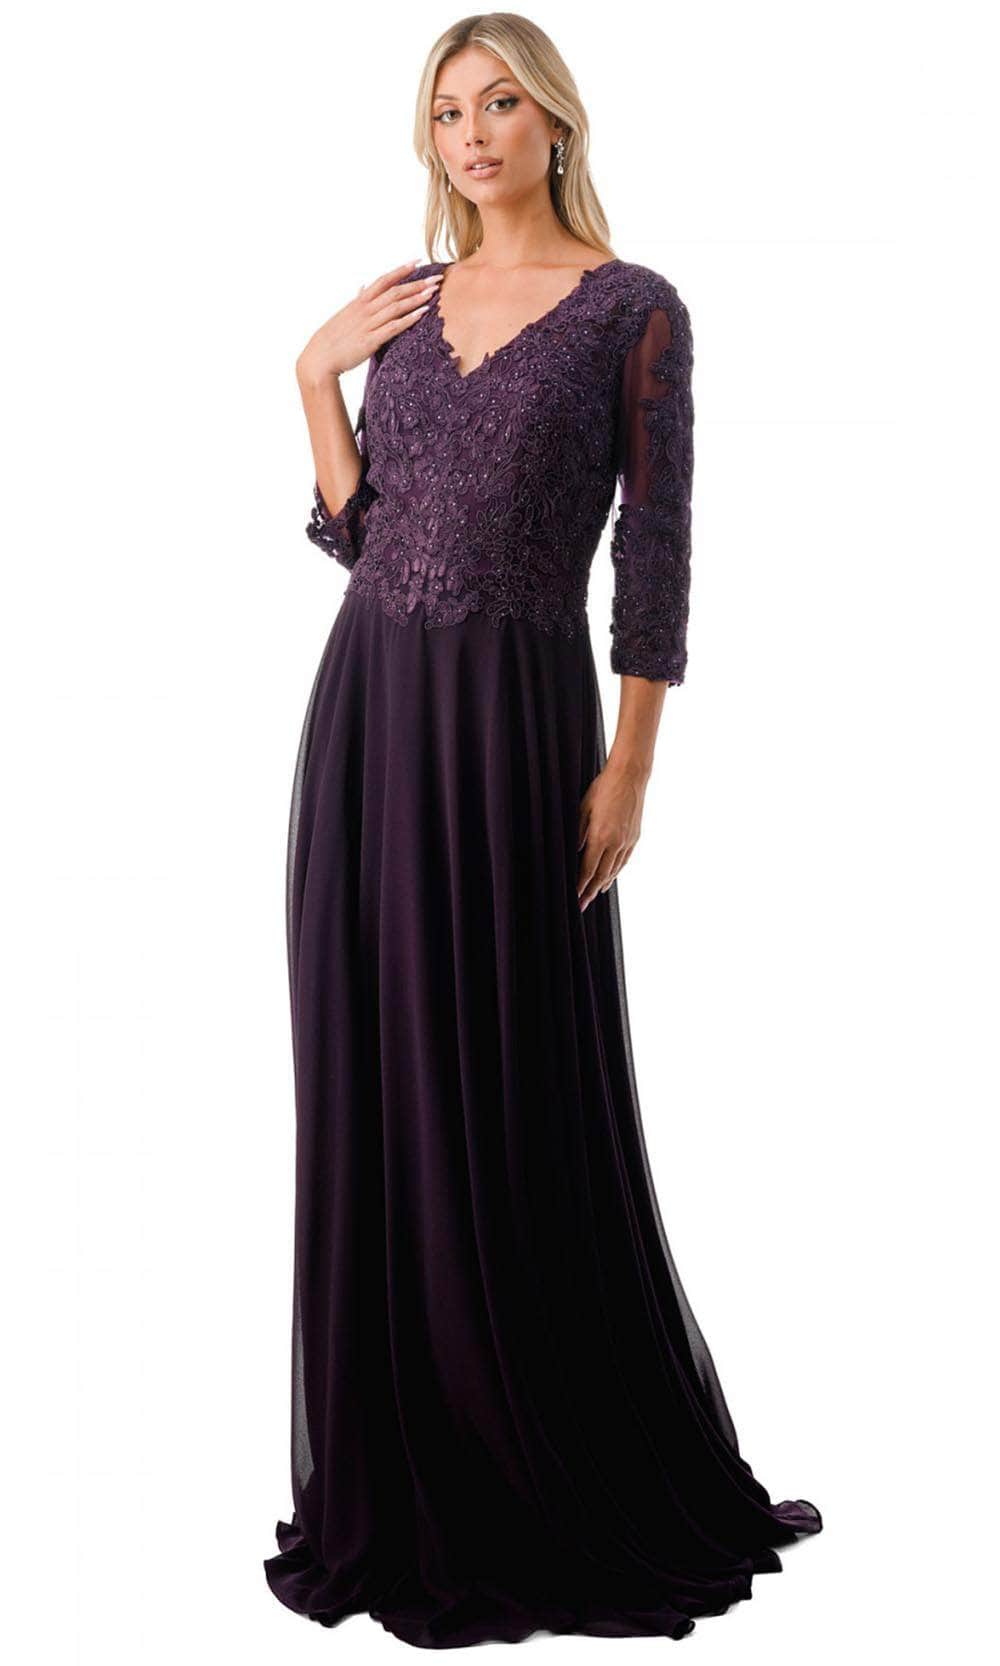 Aspeed Design M2758Q - Lace Appliqued A-Line Evening Gown
